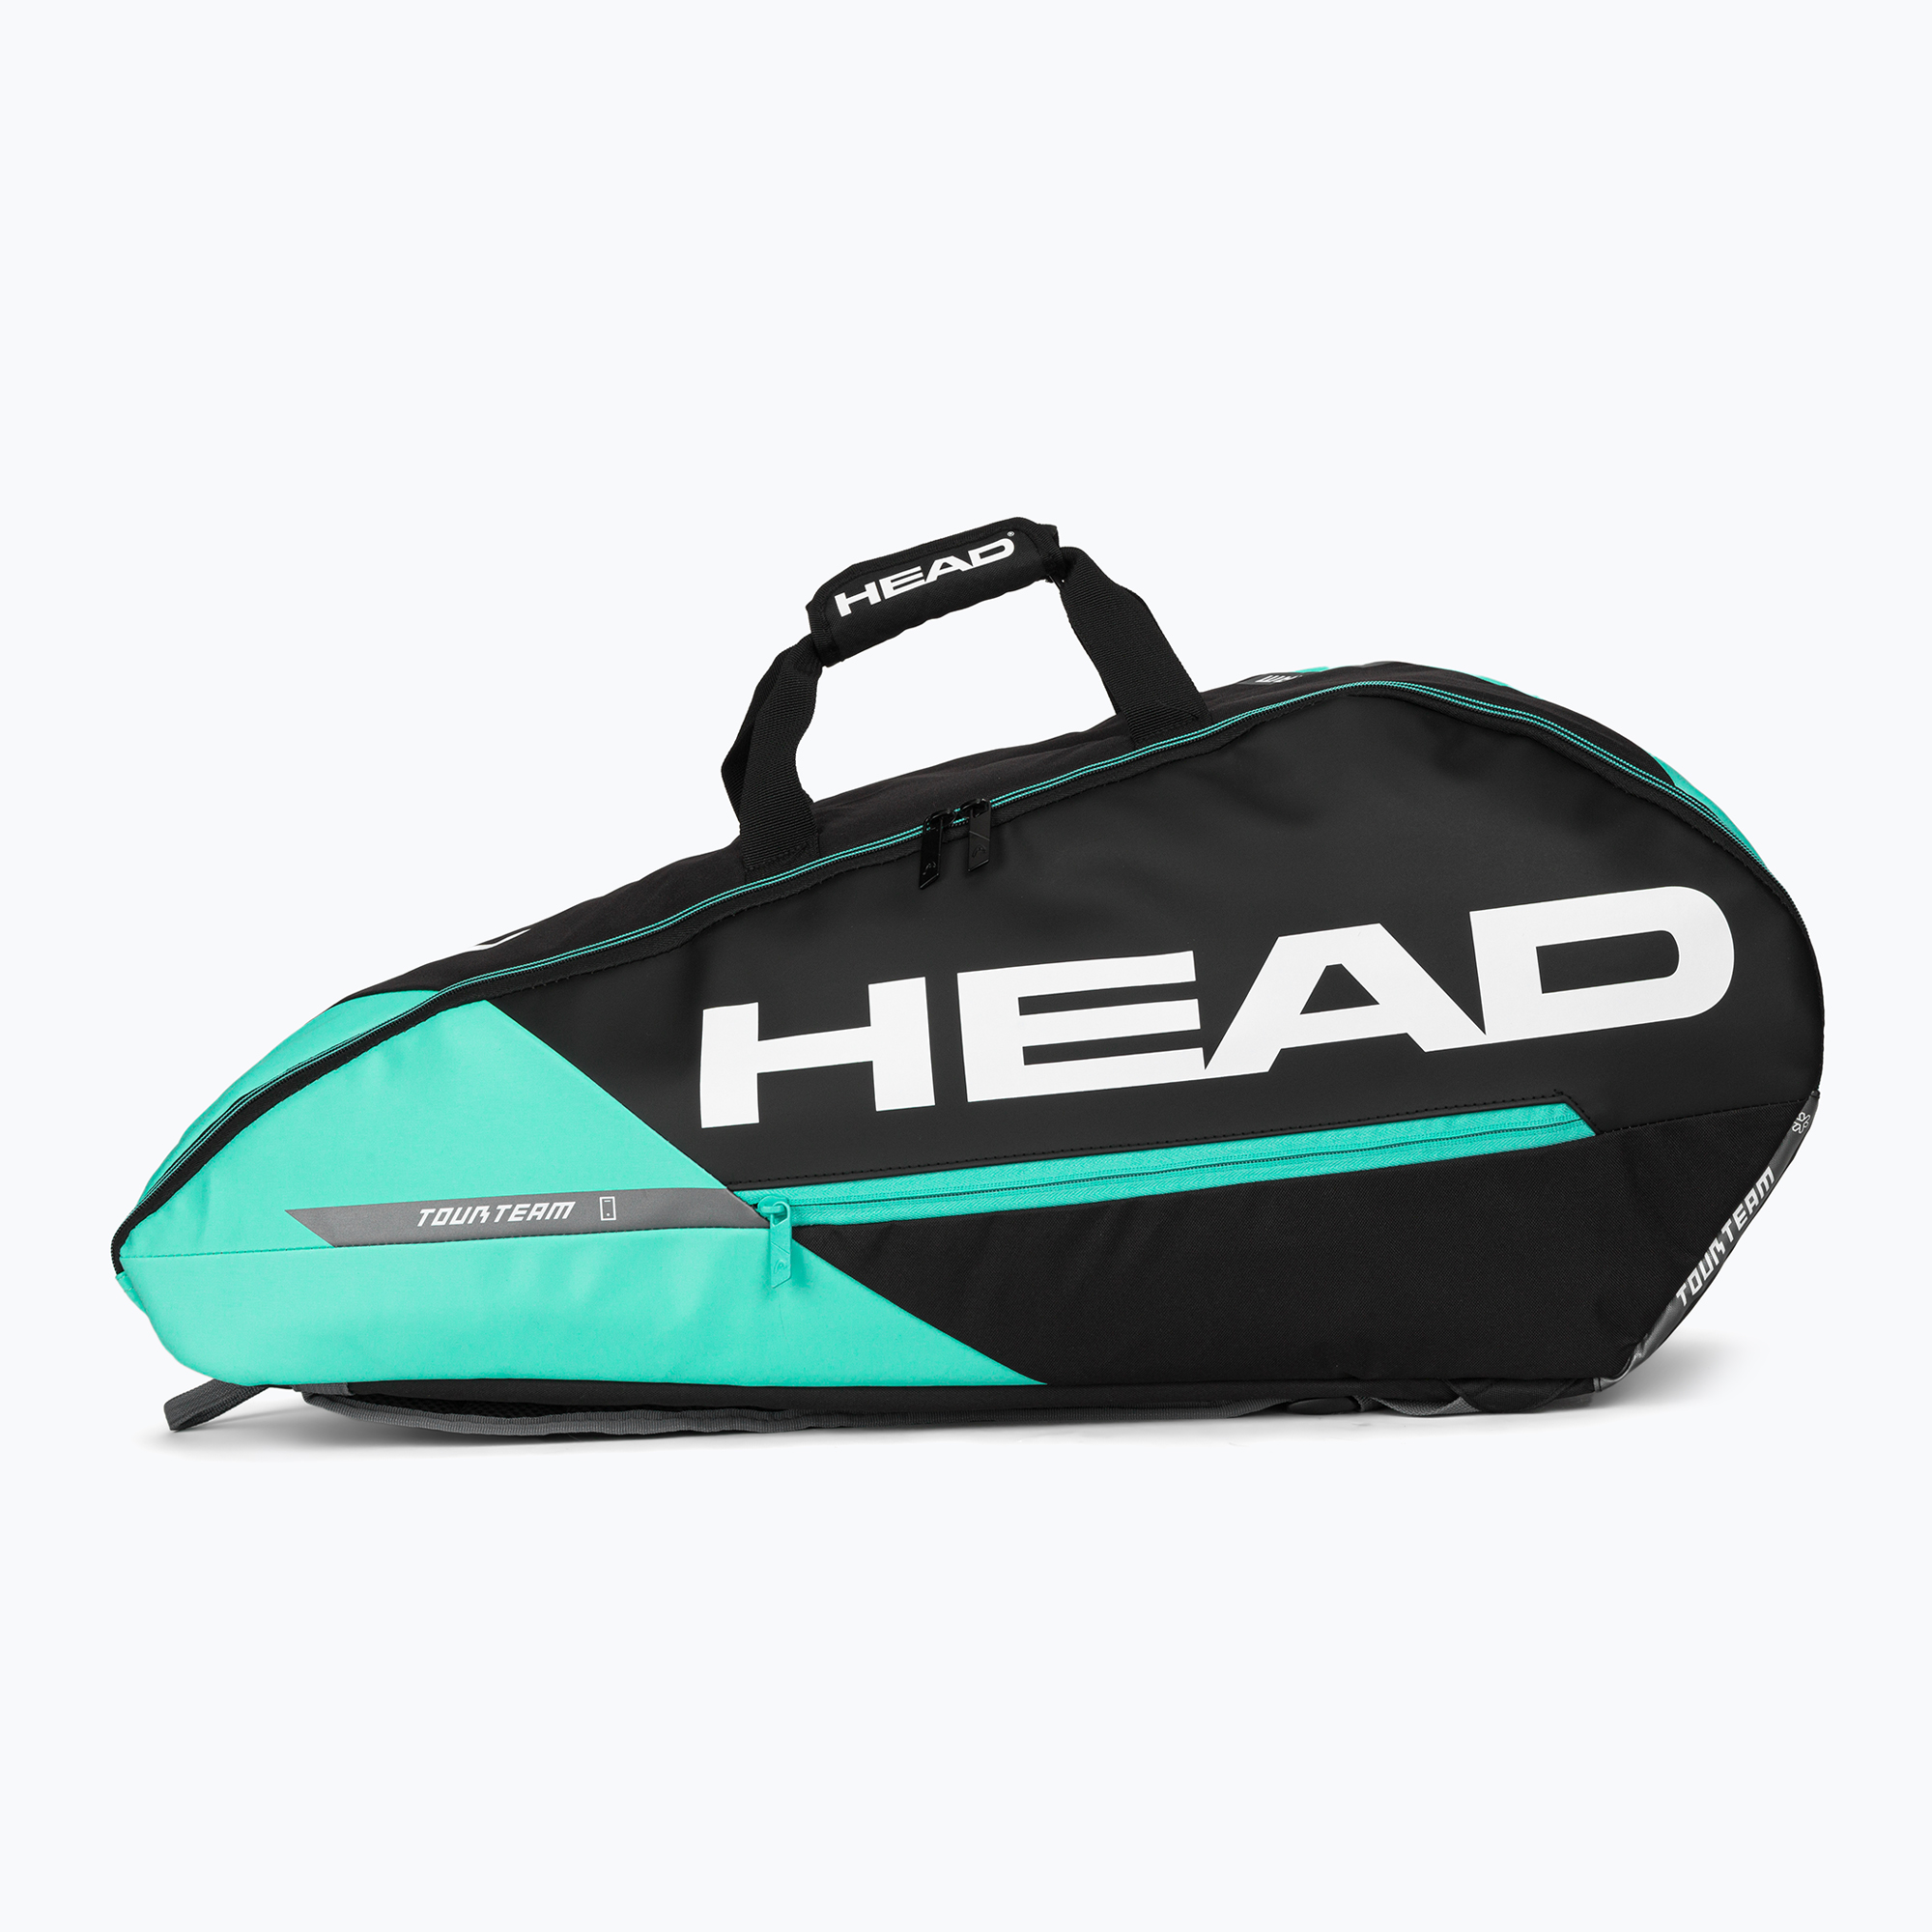 Tenisová taška HEAD Tour Team 6R 53,5 l black/blue 283482